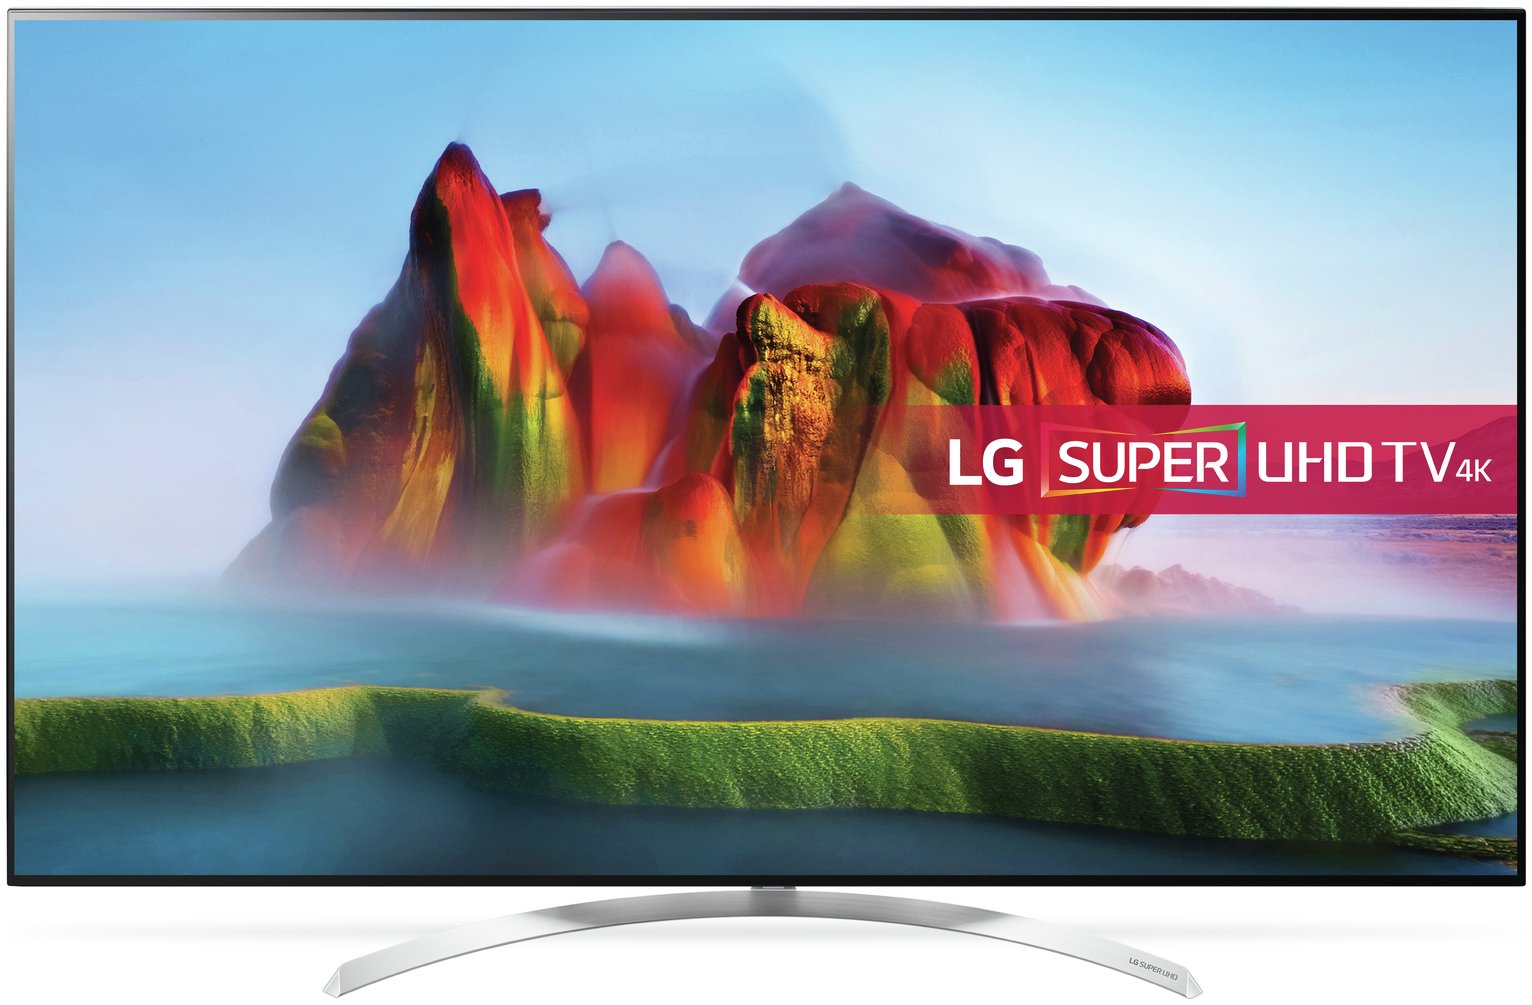 LG 60SJ850V 60 Inch Smart 4K Ultra HD TV with HDR.